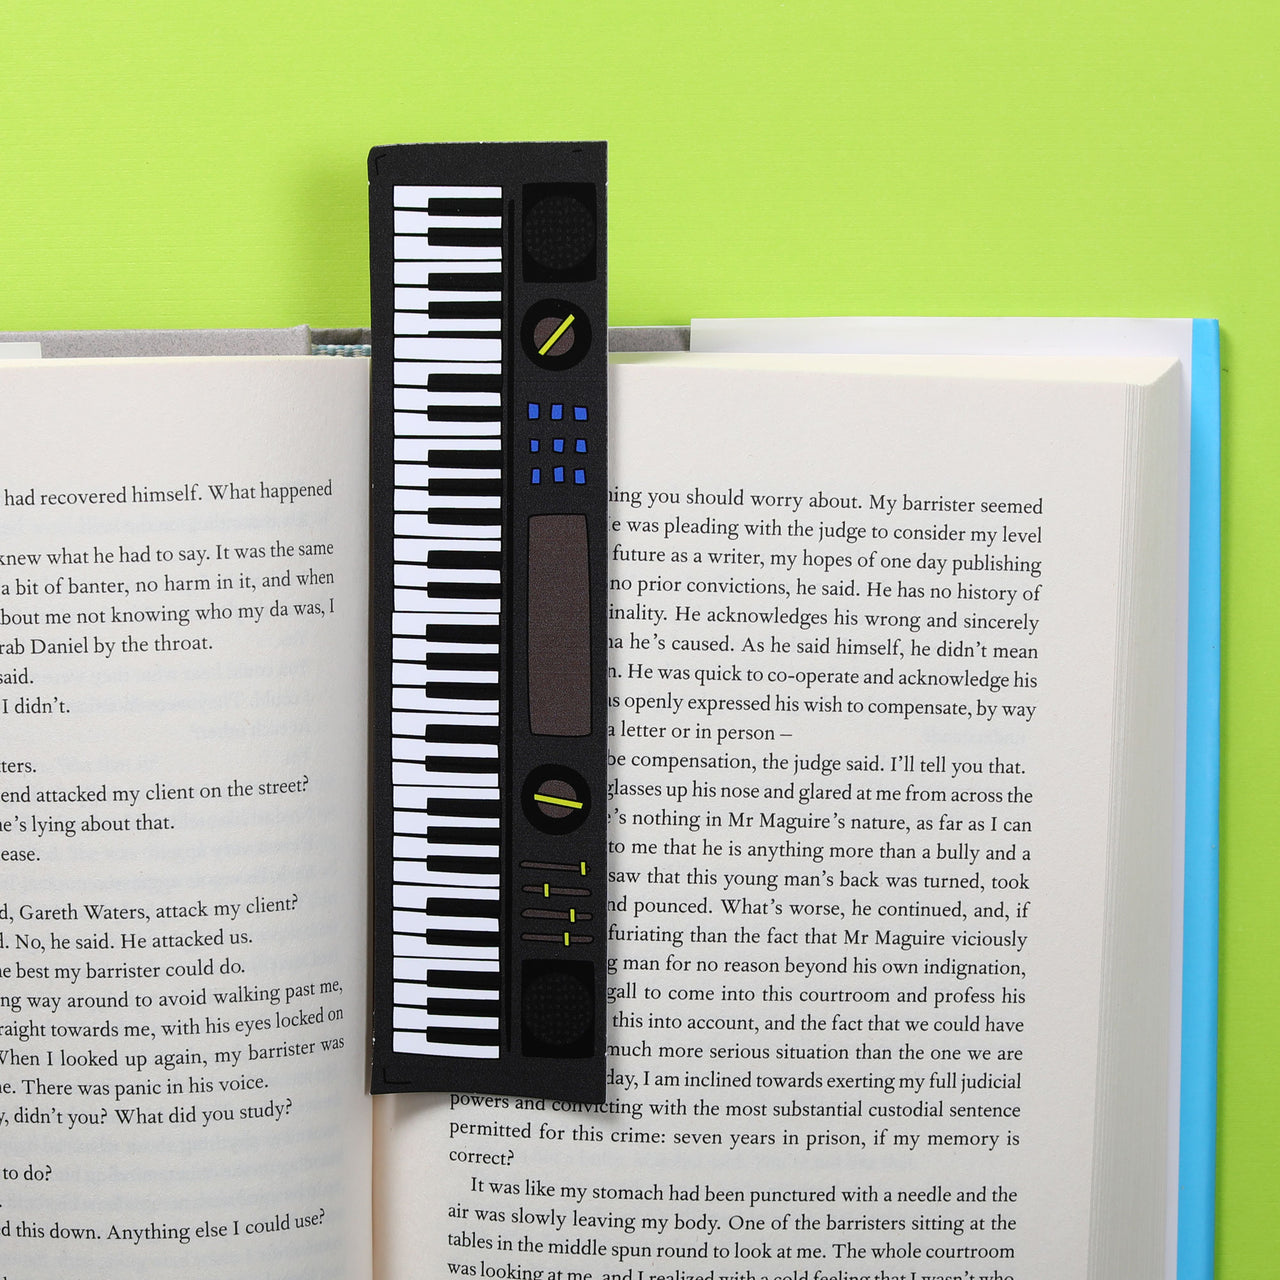 Keyboard Bookmark